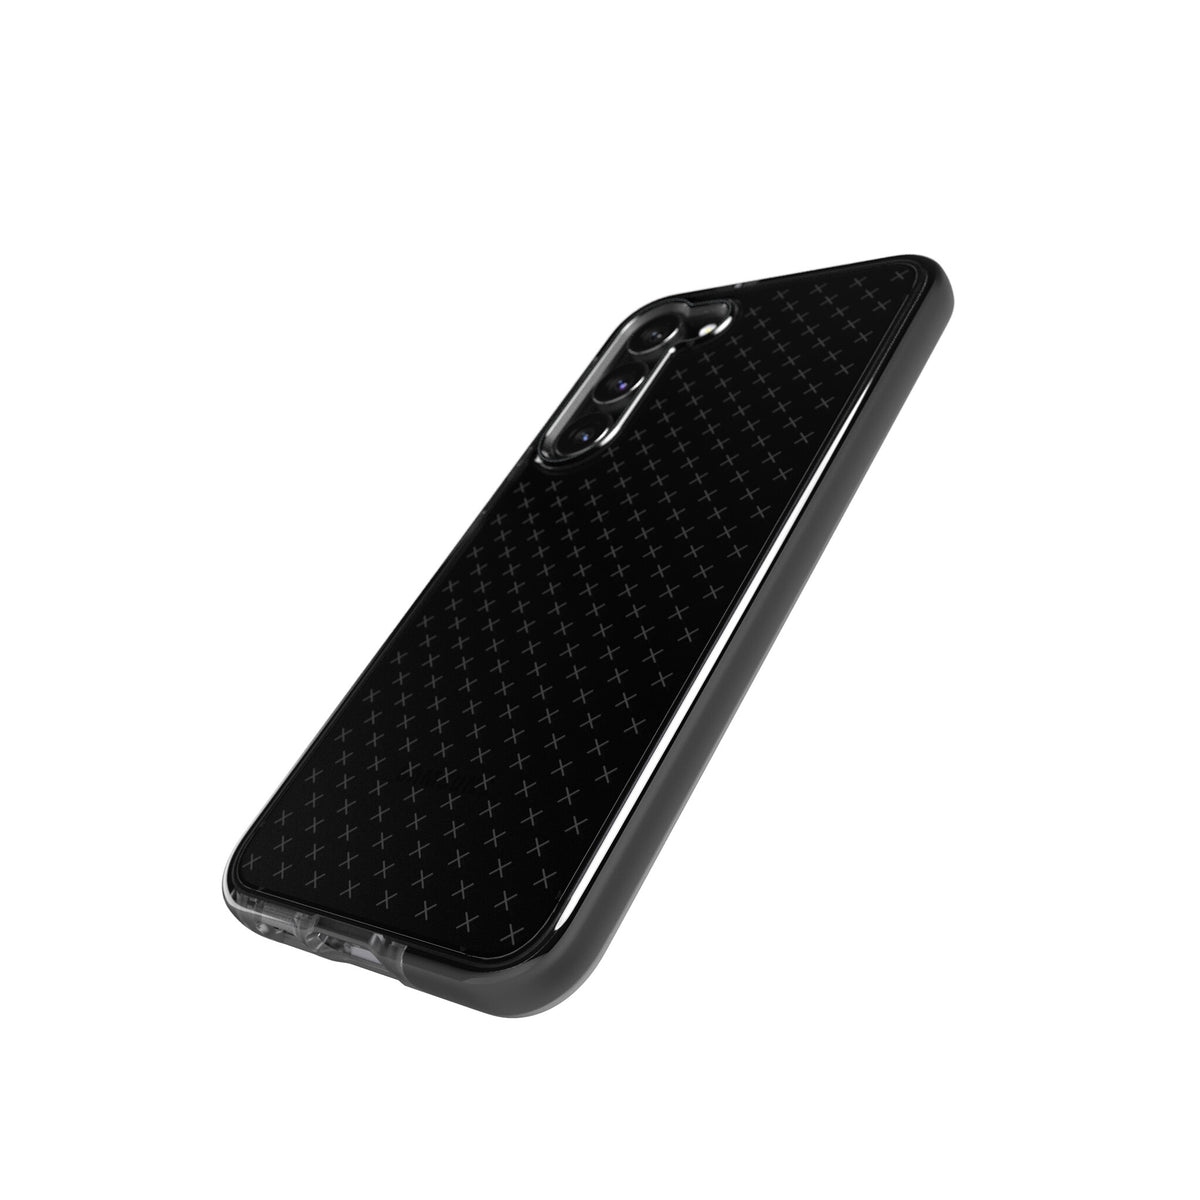 Tech21 Evo Check for Galaxy S23+ in Smokey Black